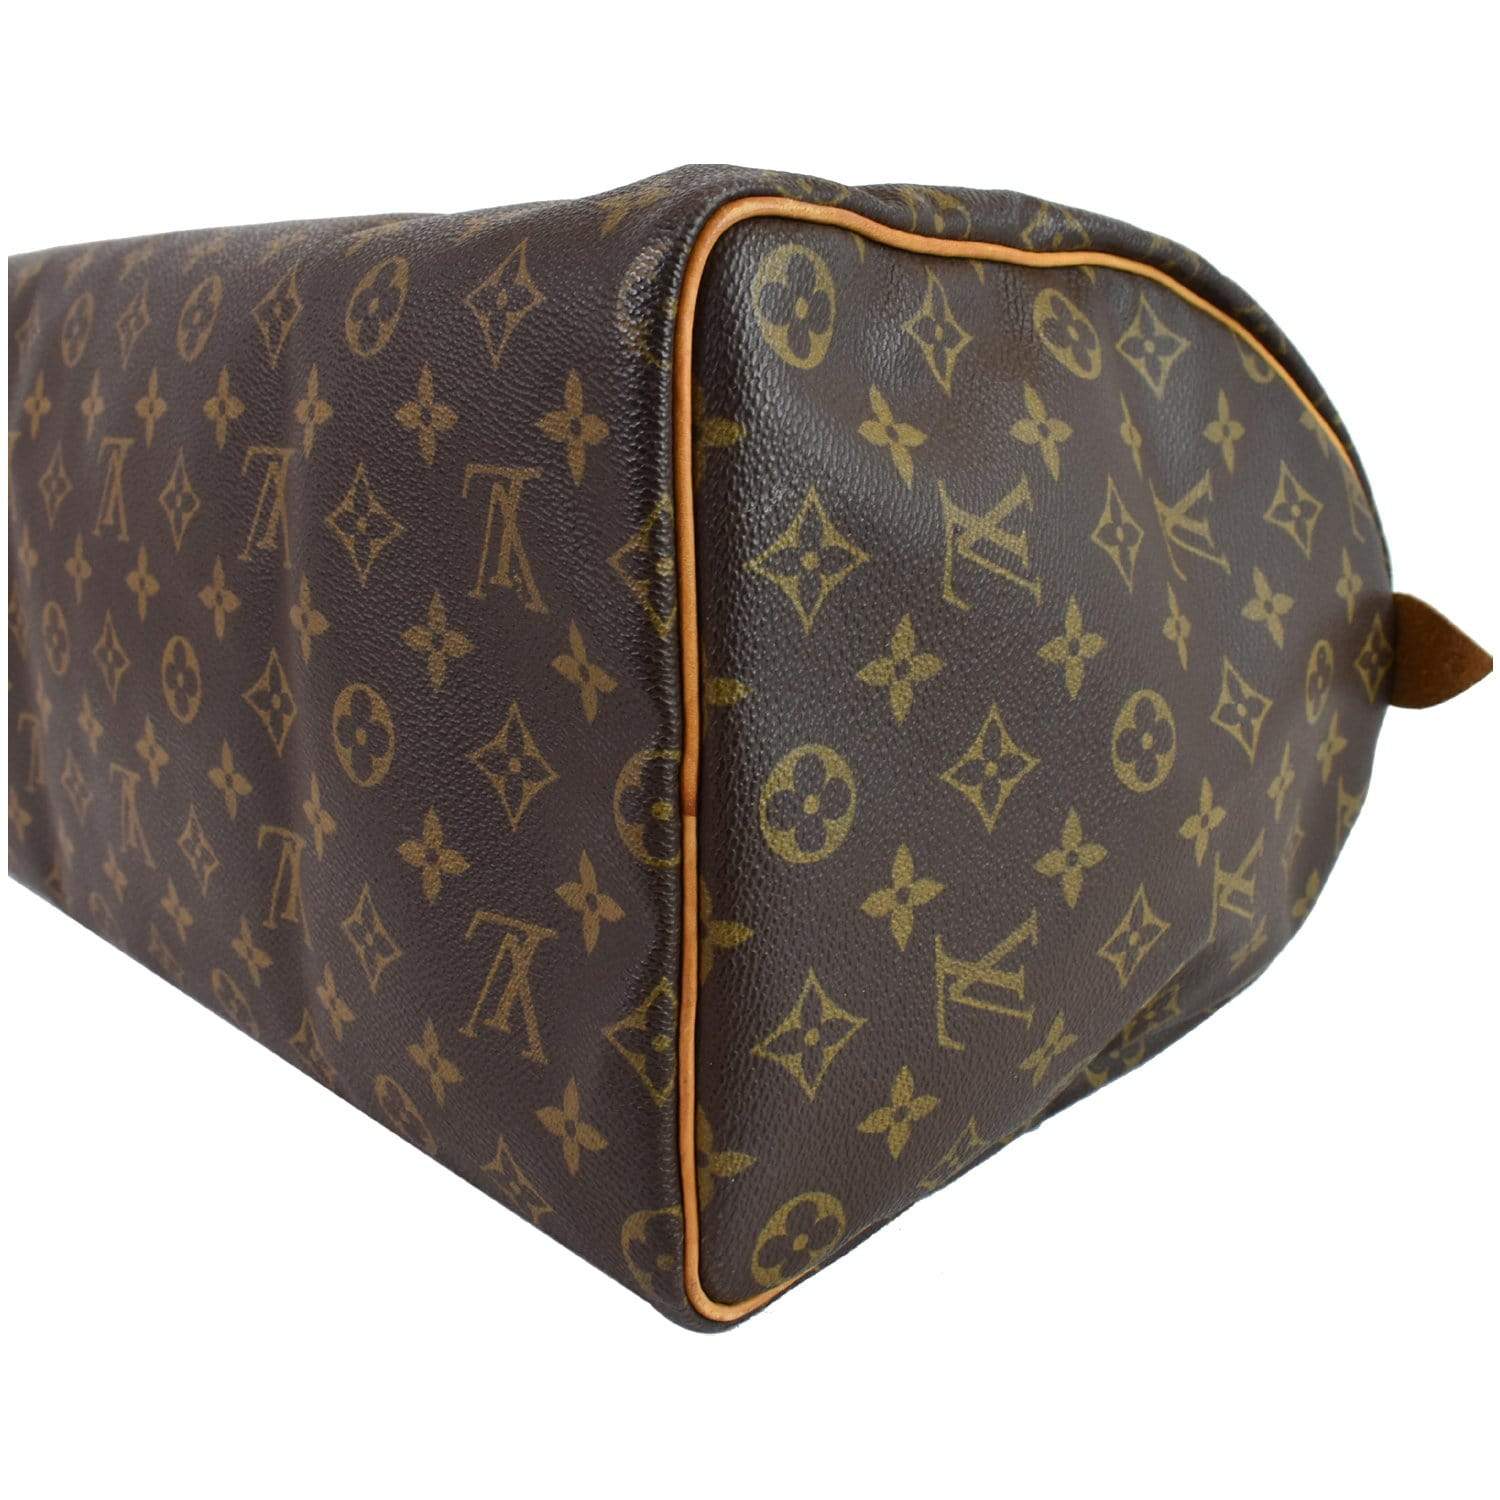 €1M Louis Vuitton “Millionaire Speedy 40” bag composed of